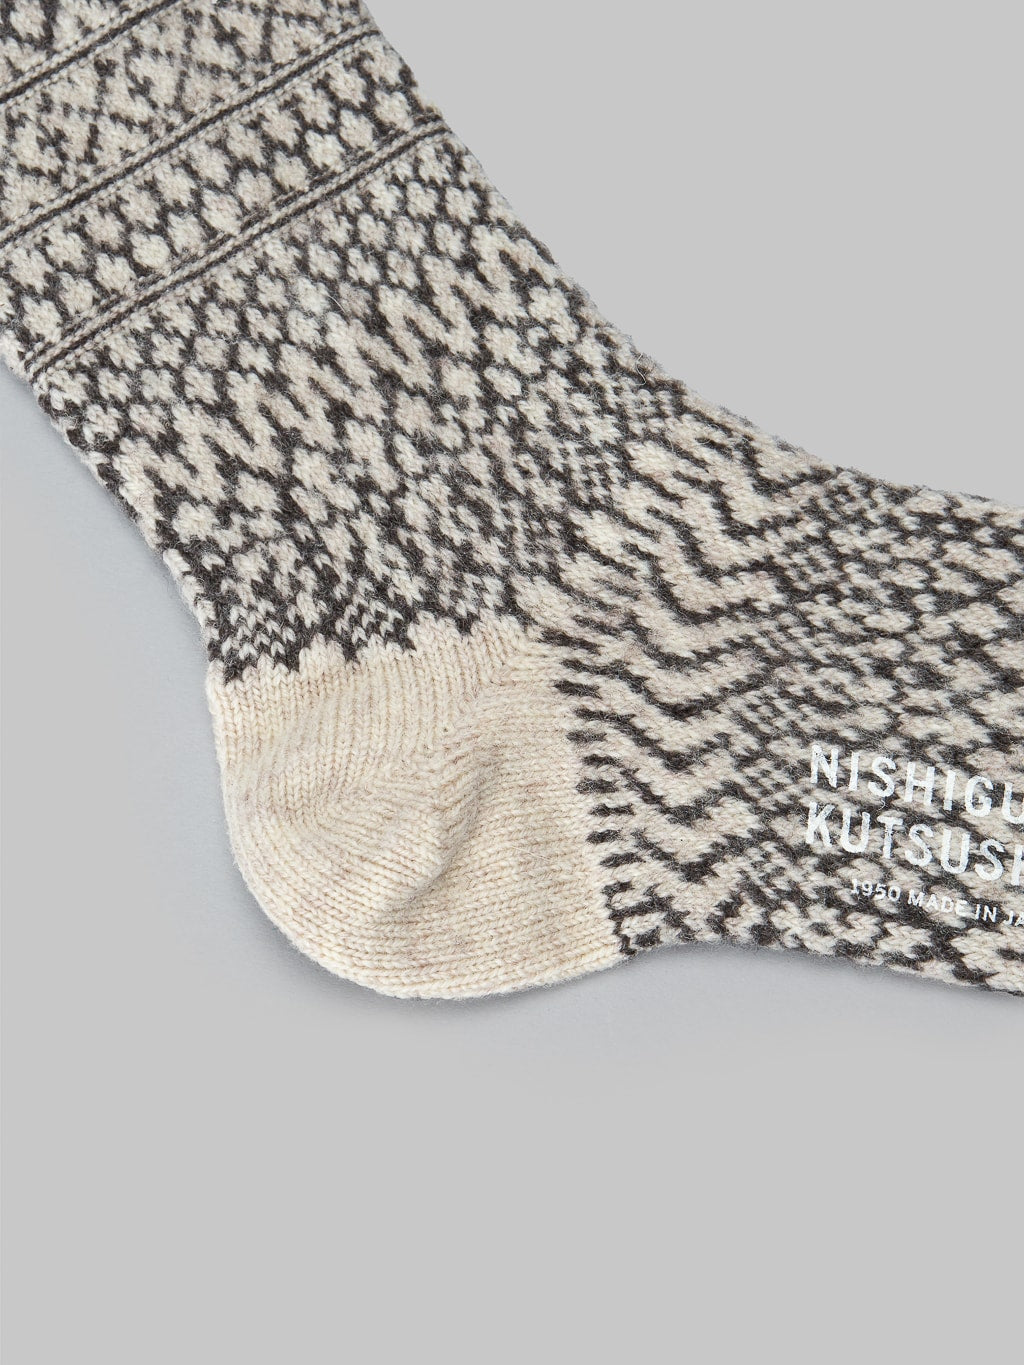 Nishiguchi Kutsushita Wool Jacquard Socks Oatmeal Texture